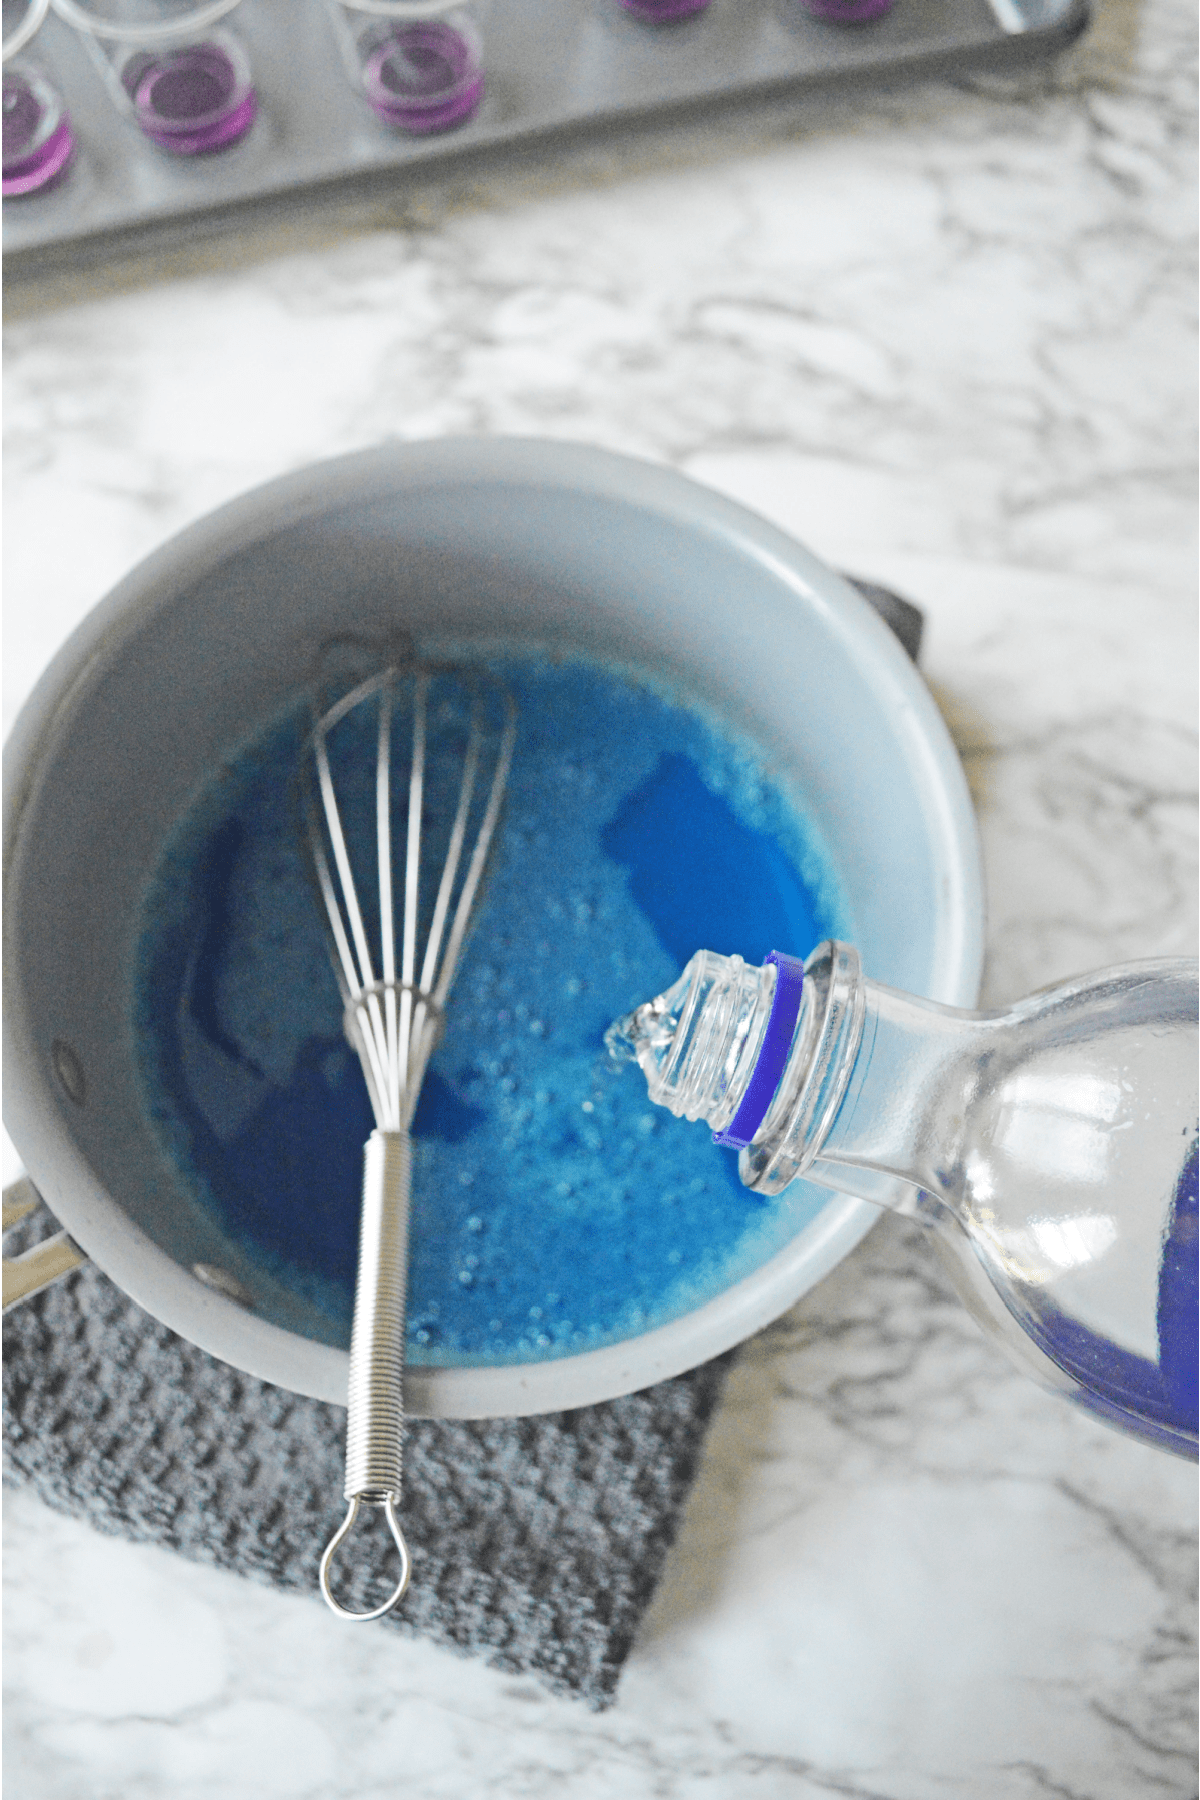 Adding alcohol to blue jello